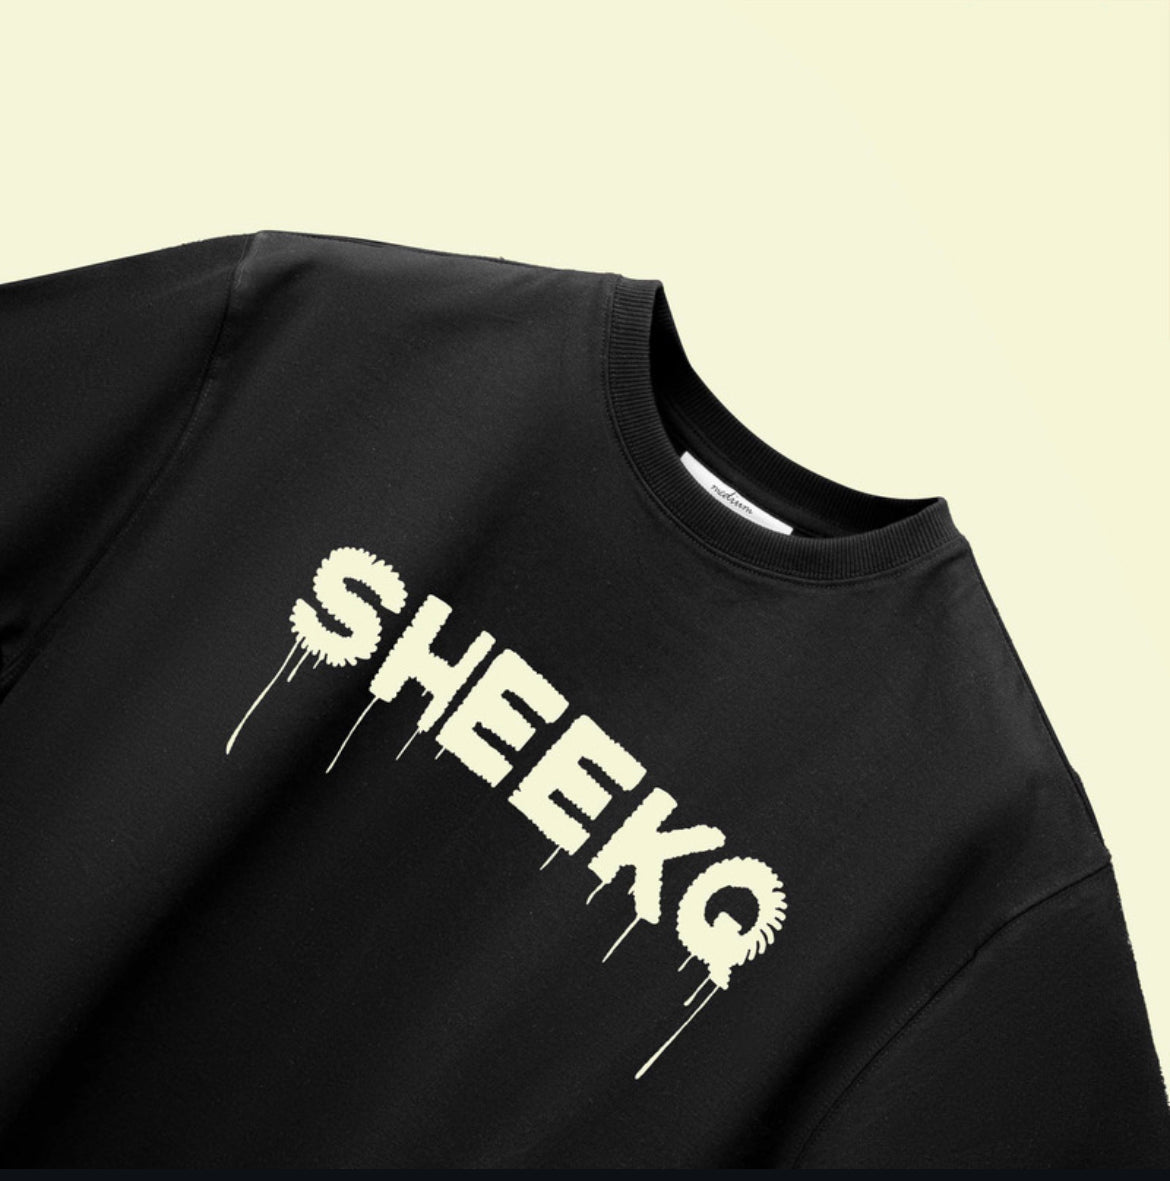 SHEEKQ Zenflow Oversized Statement T-Shirt (Black)